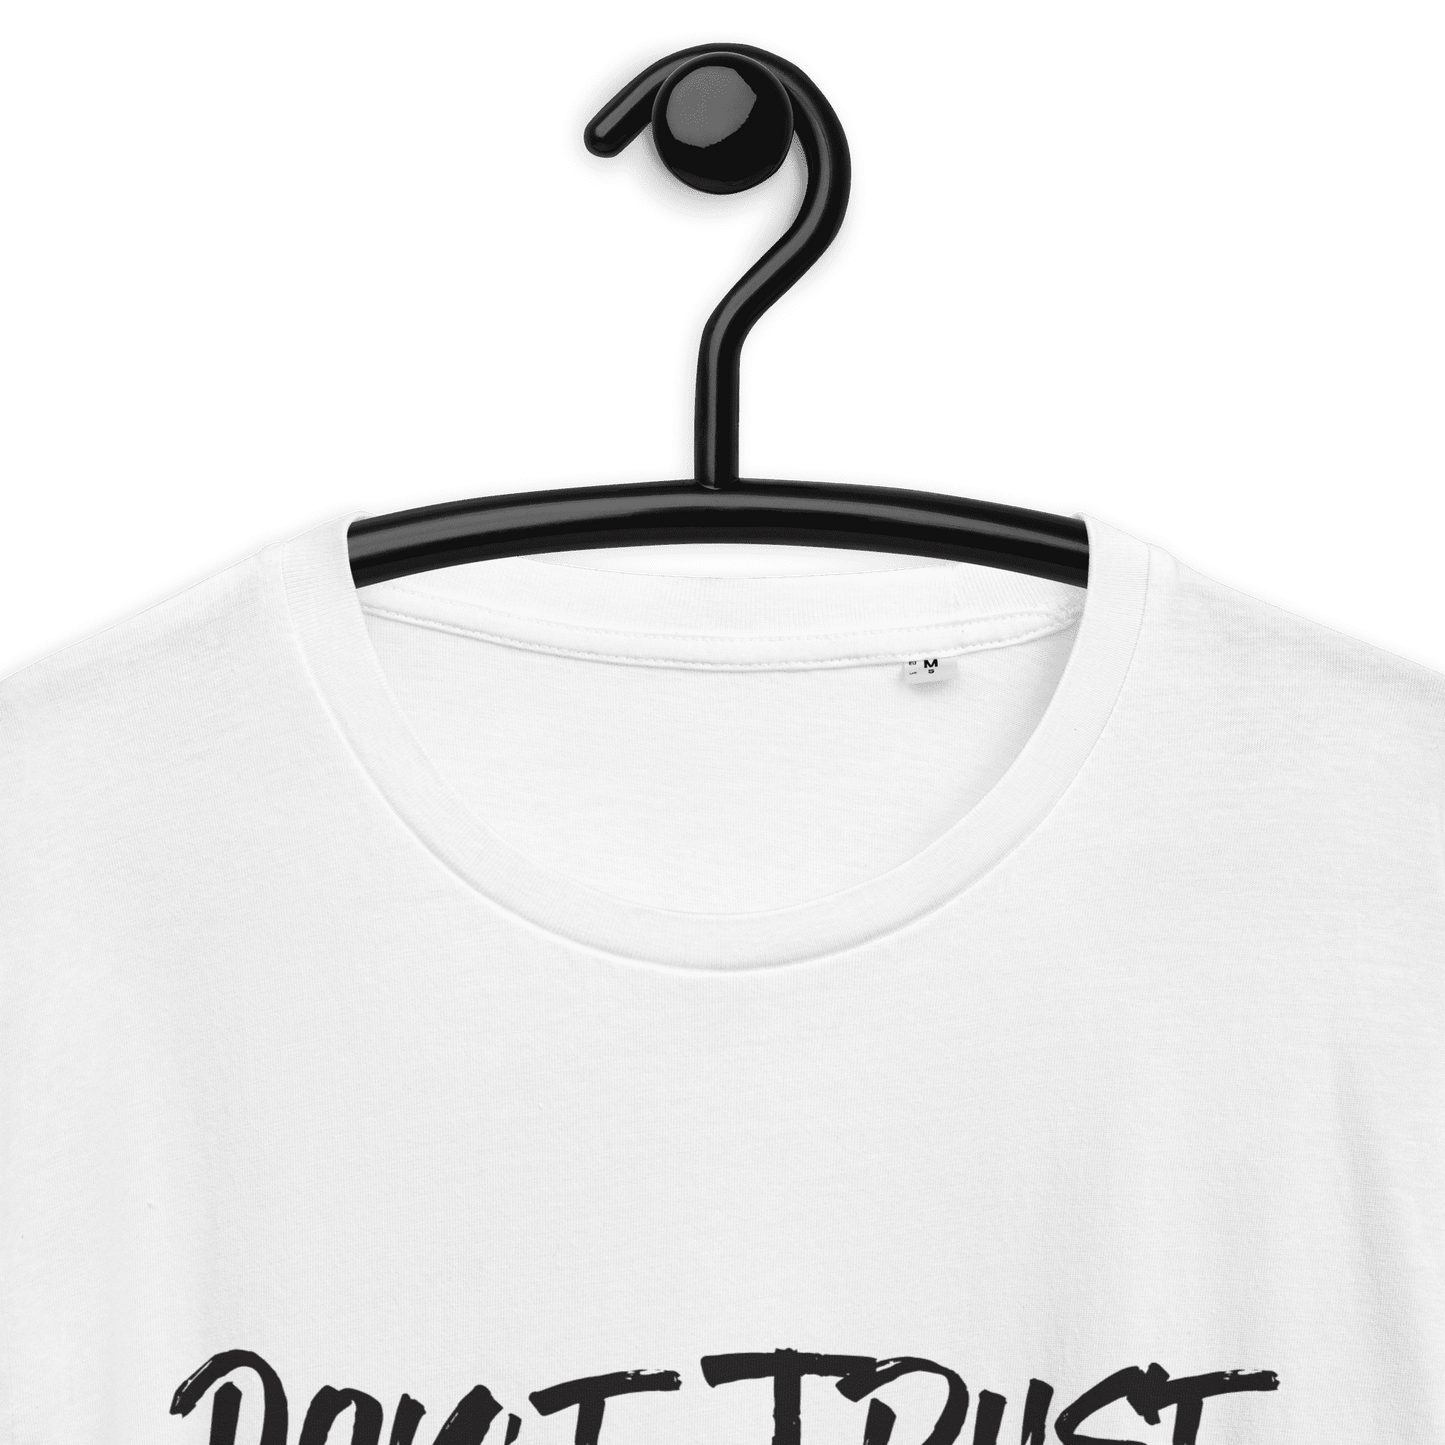 Don't Trust Verify! | Organic Cotton Bitcoin T-Shirt